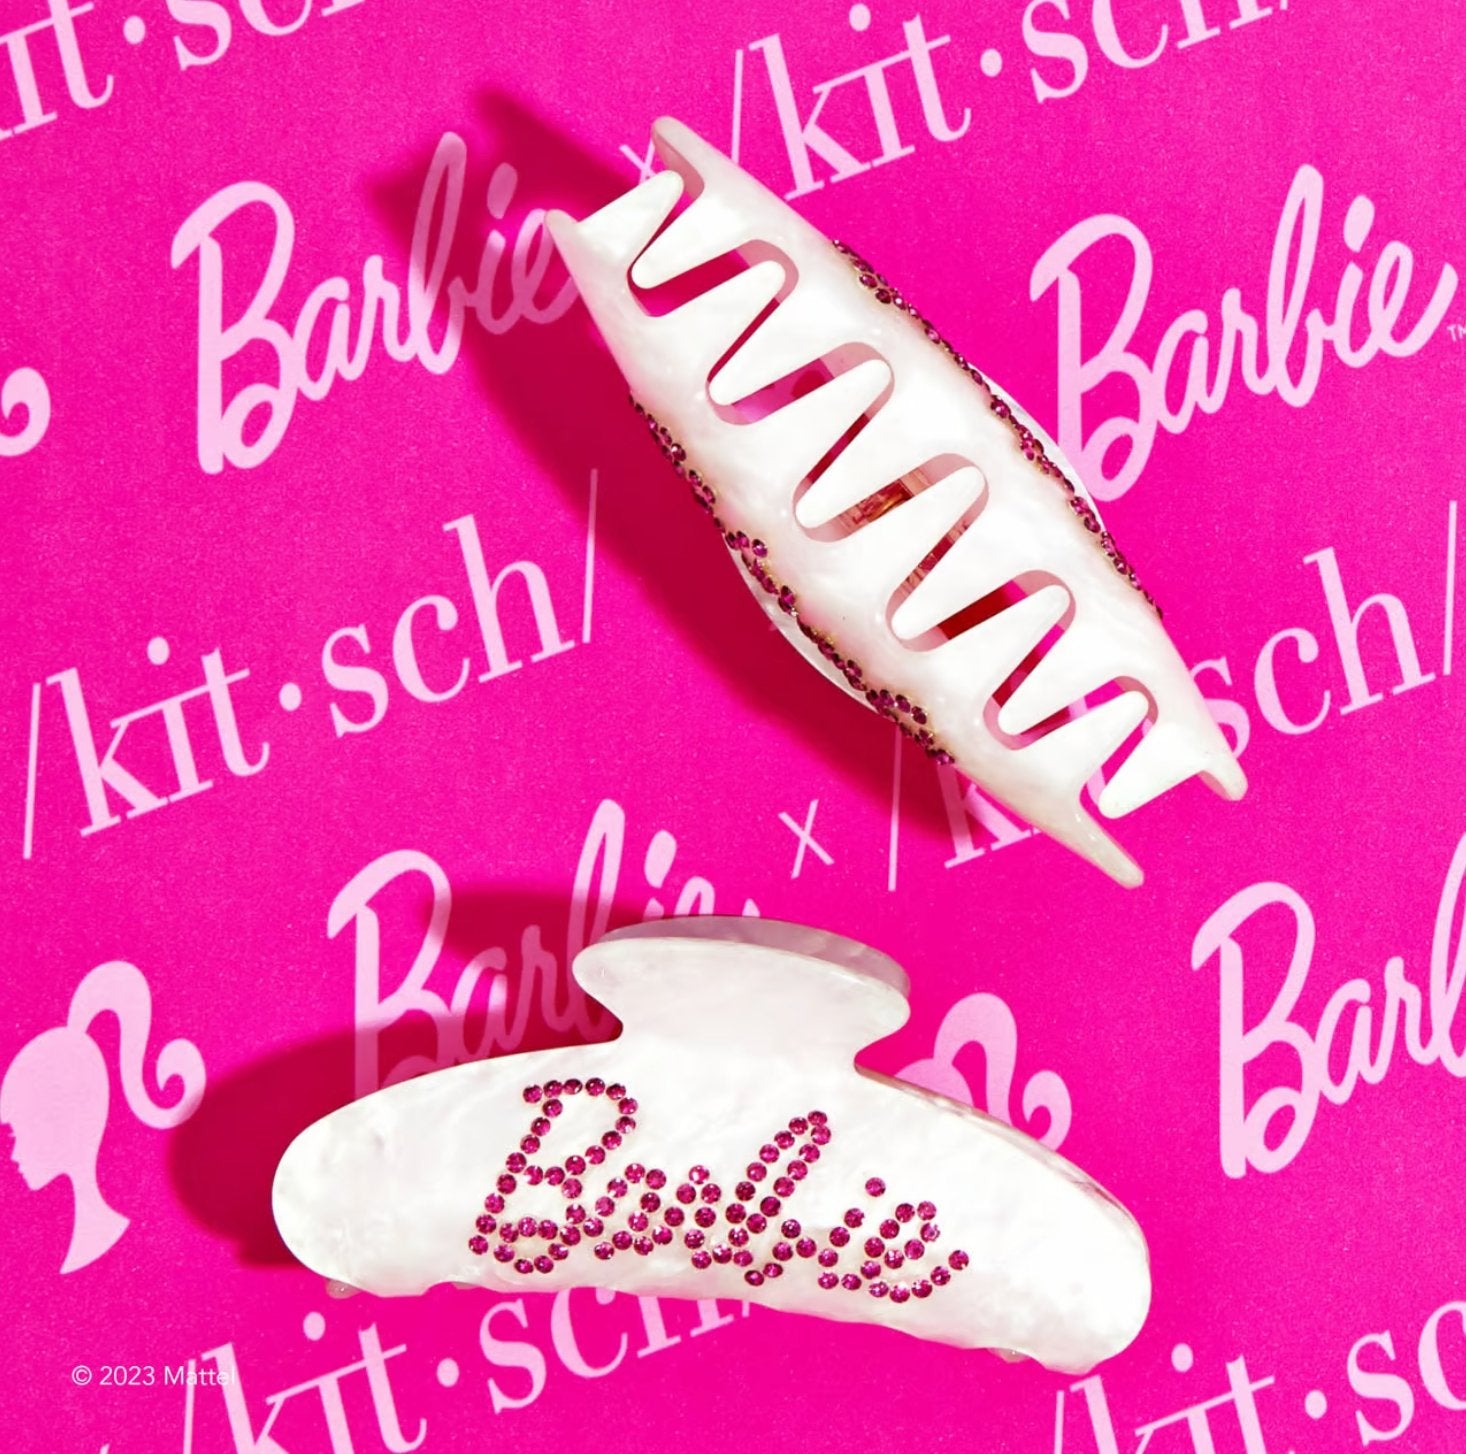 Barbie x Kitsch Rhinestone Claw Clip